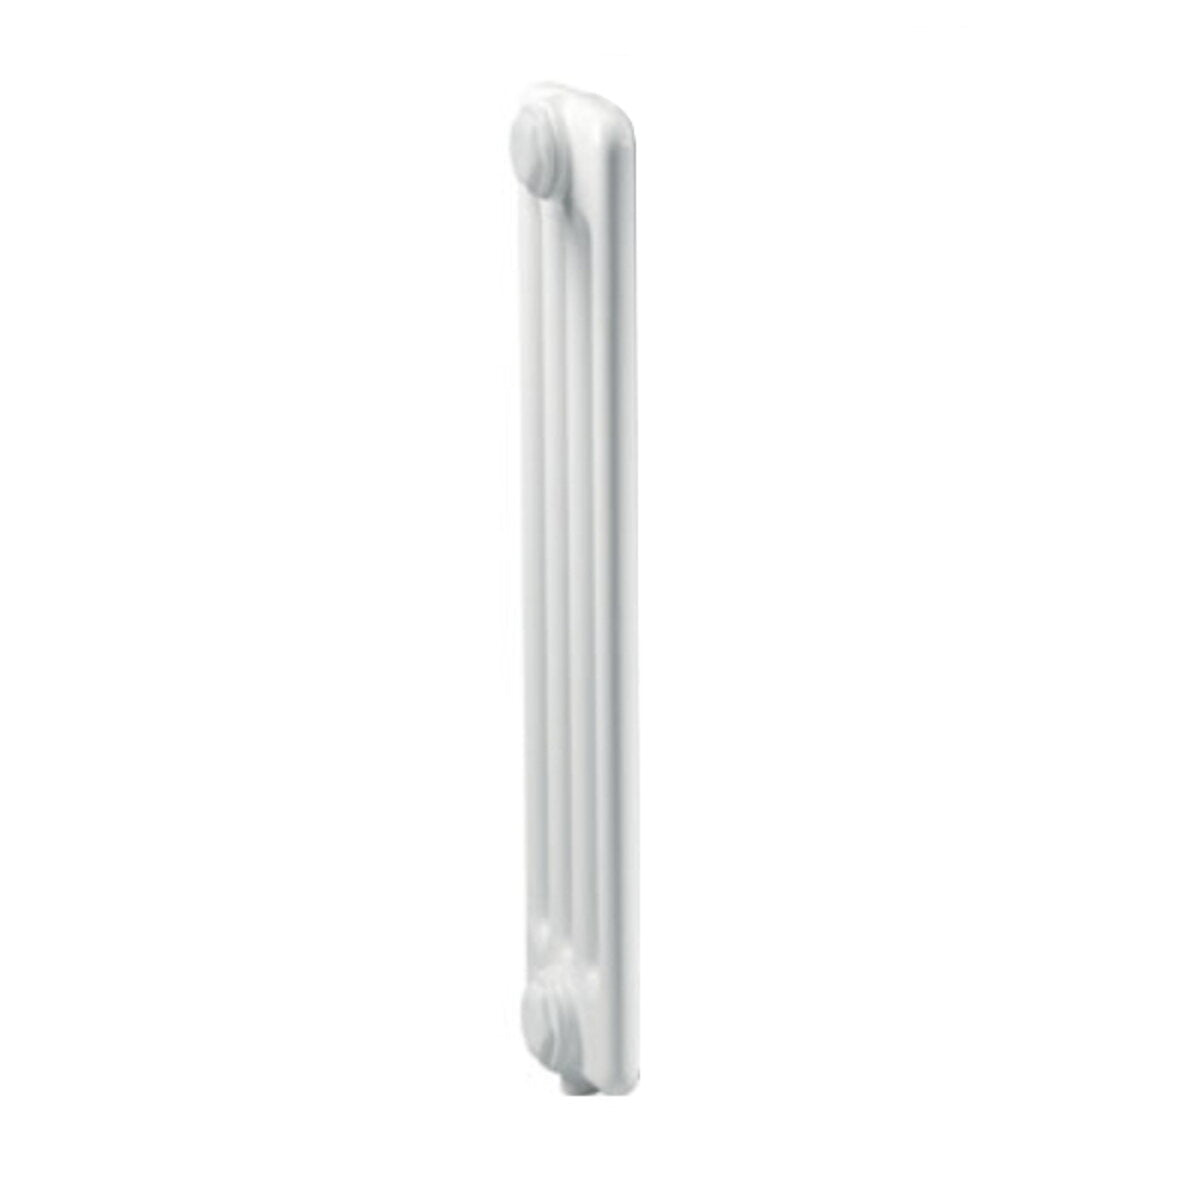 Ercos Comby steel column radiator single element 3 columns center distance 935 mm